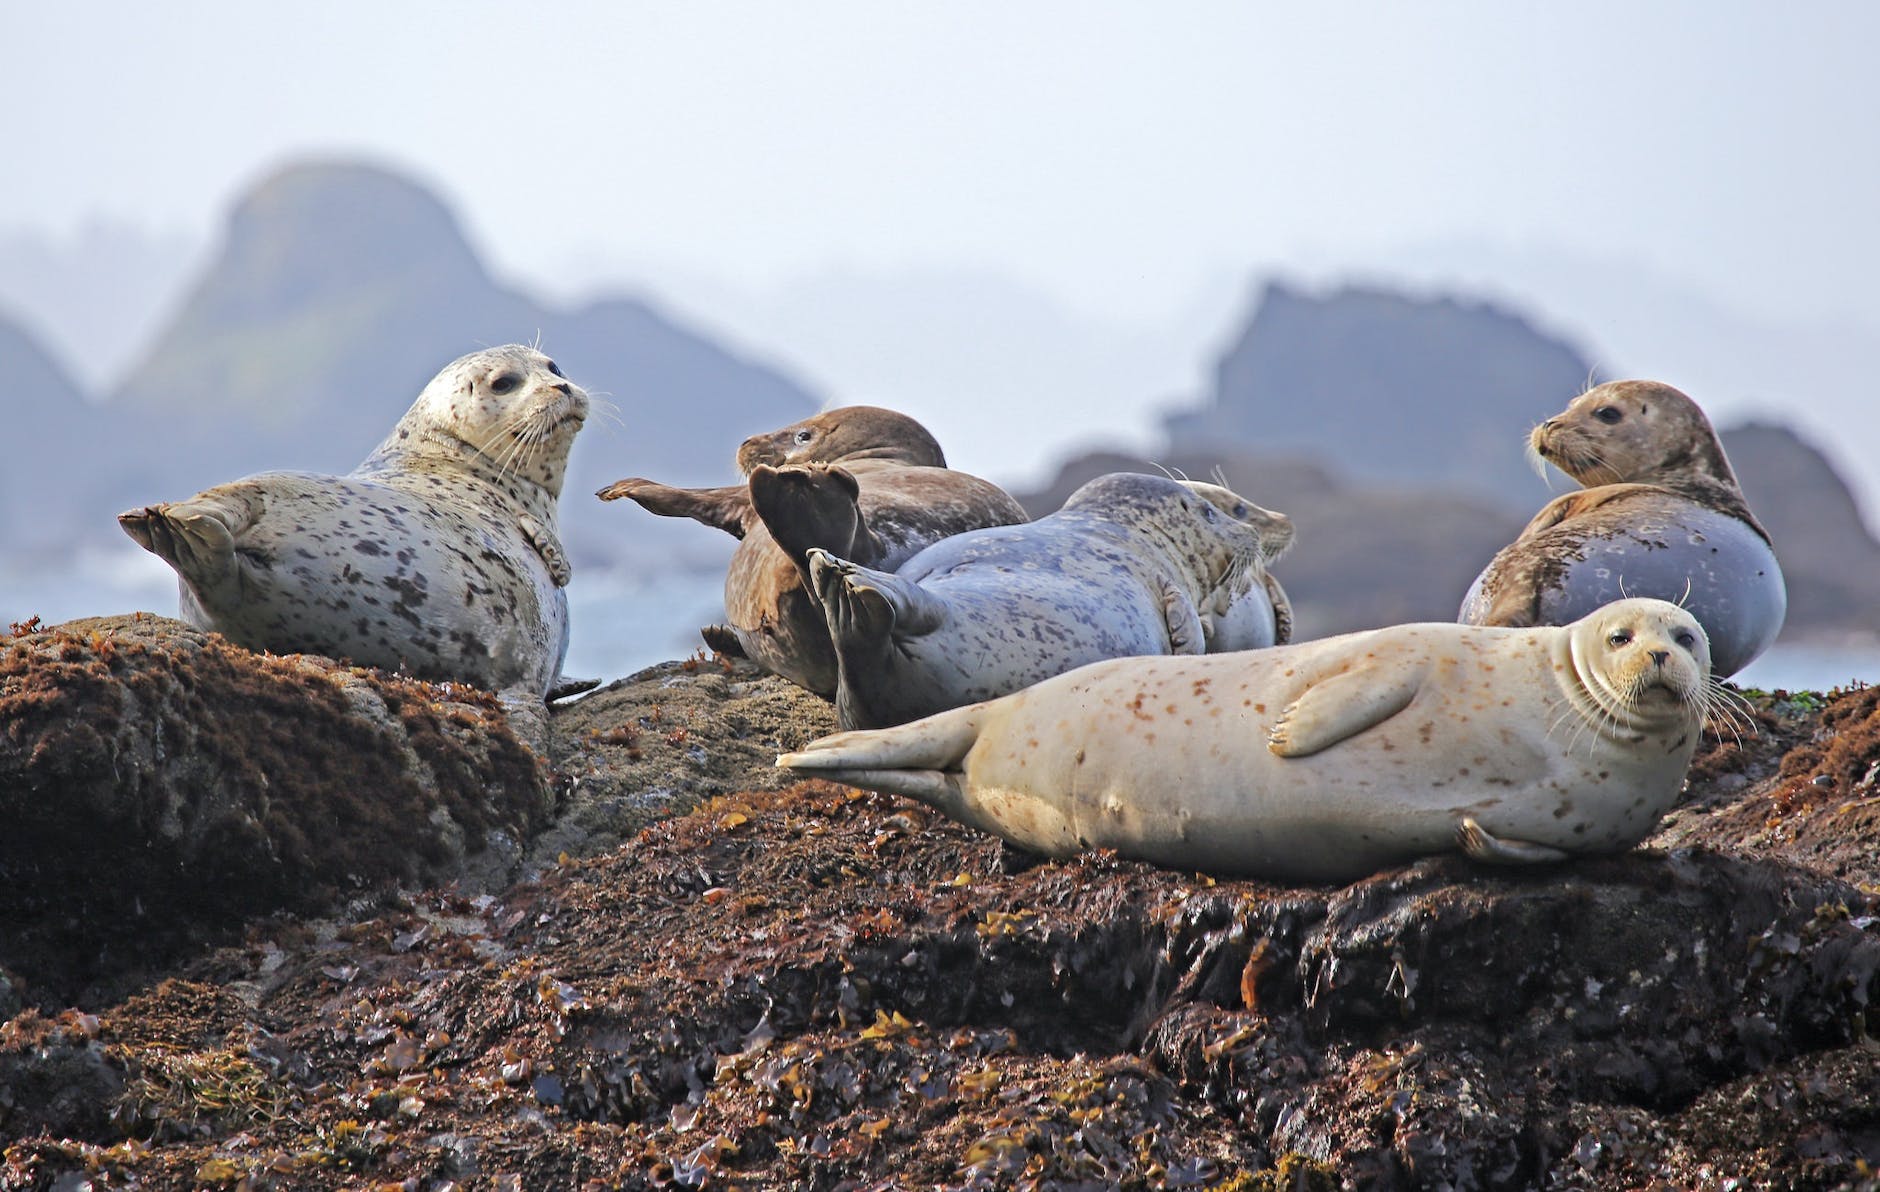 Science News: A Natural Rhythmic Aptitude Develops in Newborn Seals